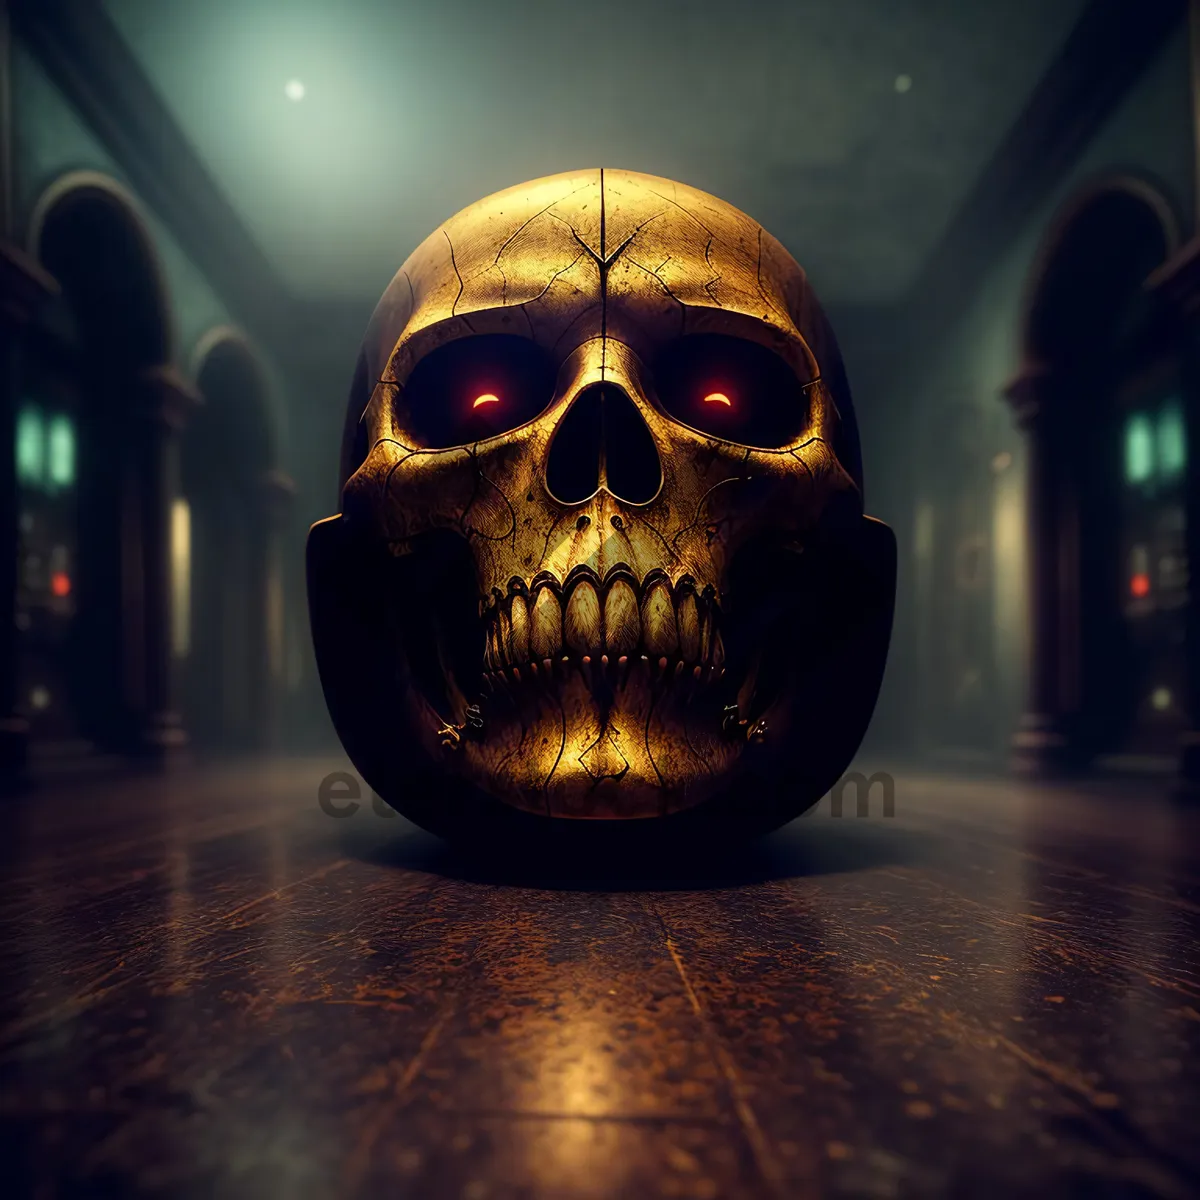 Picture of Frightful Jack-o'-Lantern Mask Illuminates Halloween Night